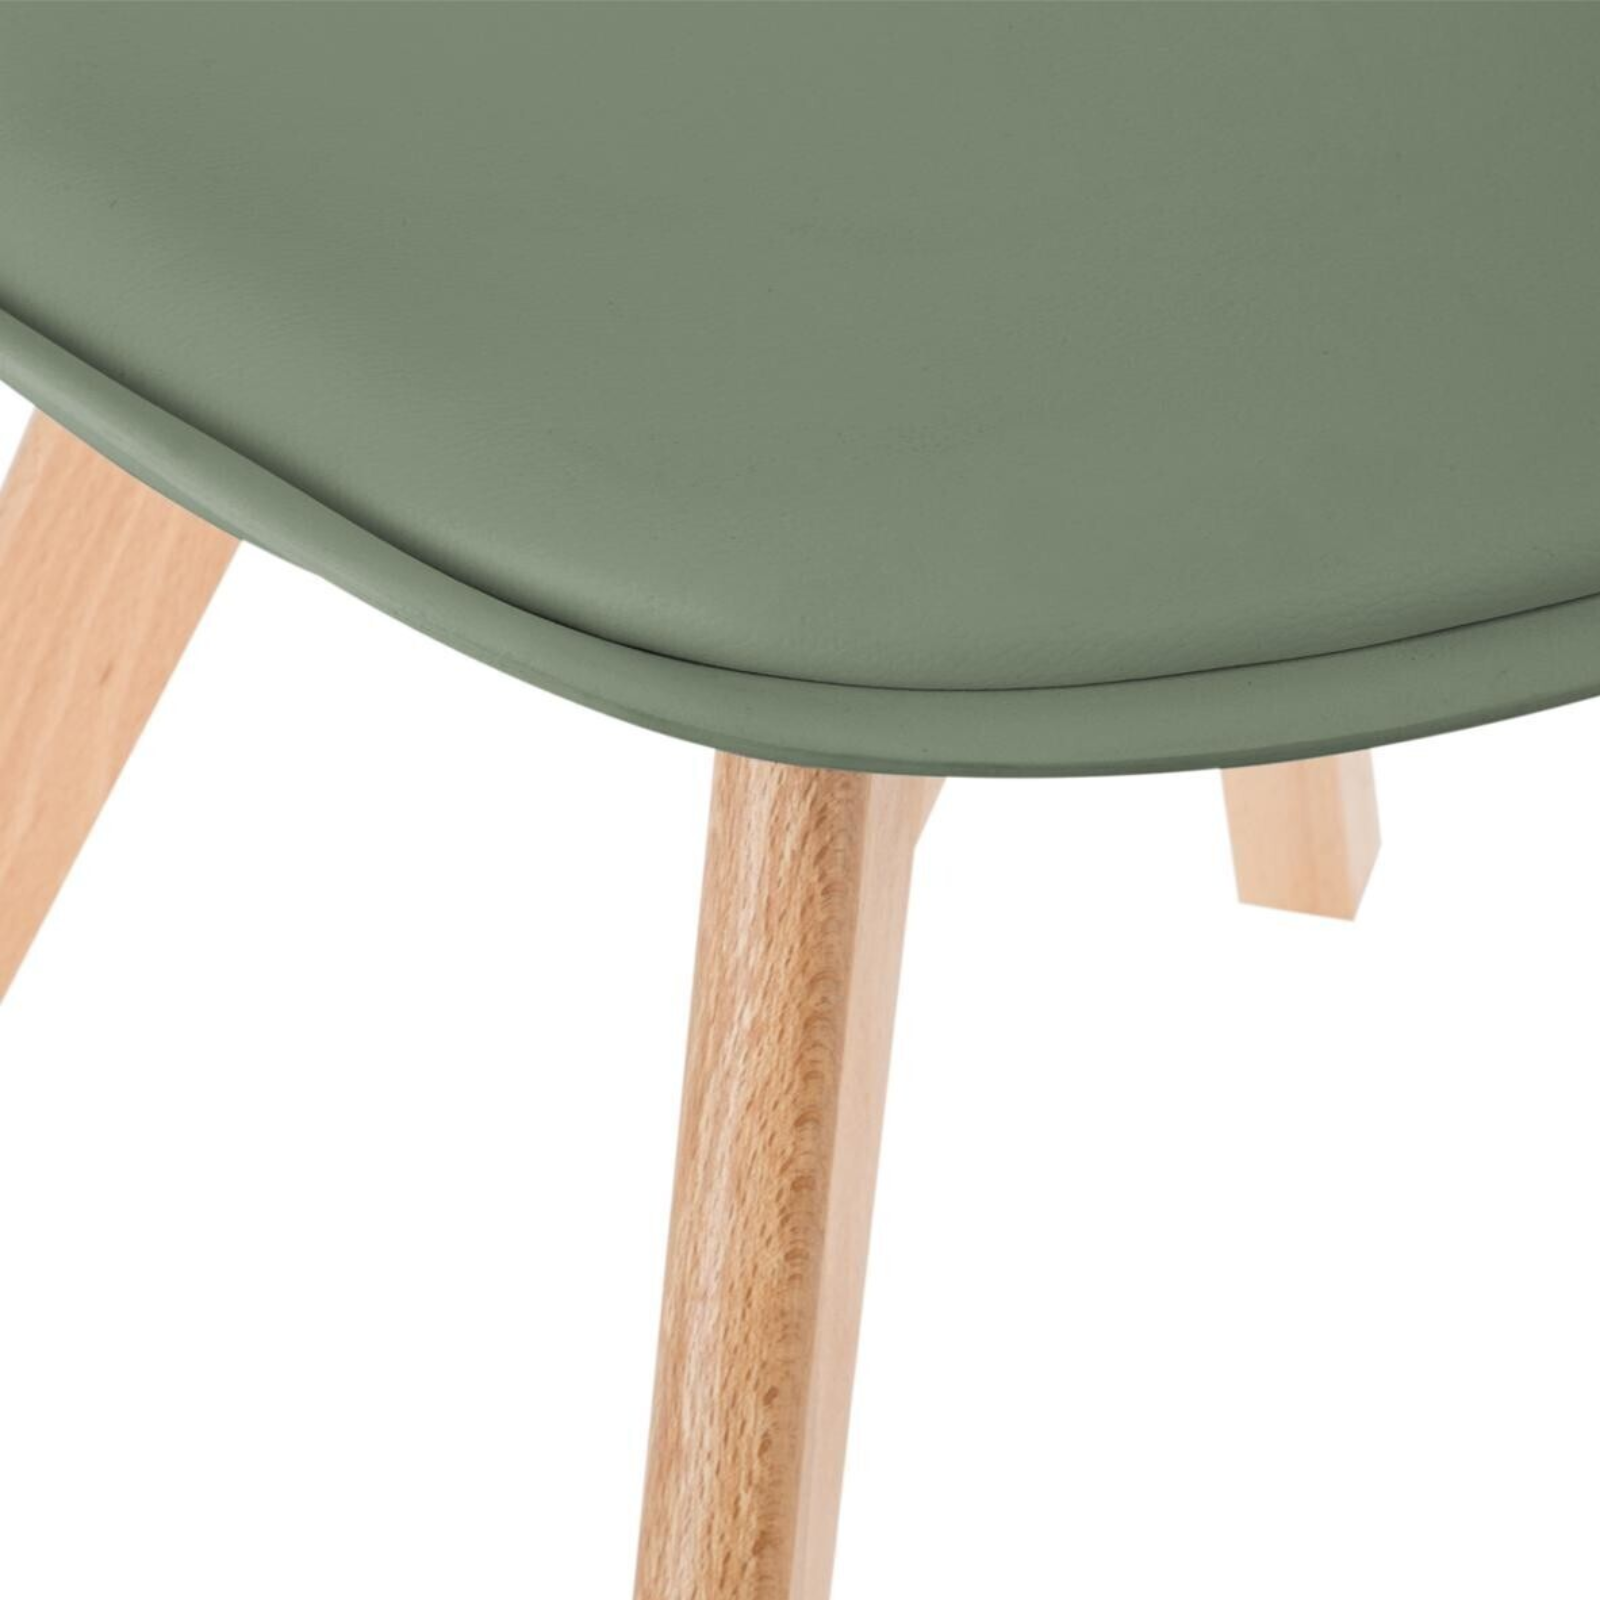 Sedia da pranzo design moderno gambe in legno e seduta in ecopelle e polipropilene - Bay